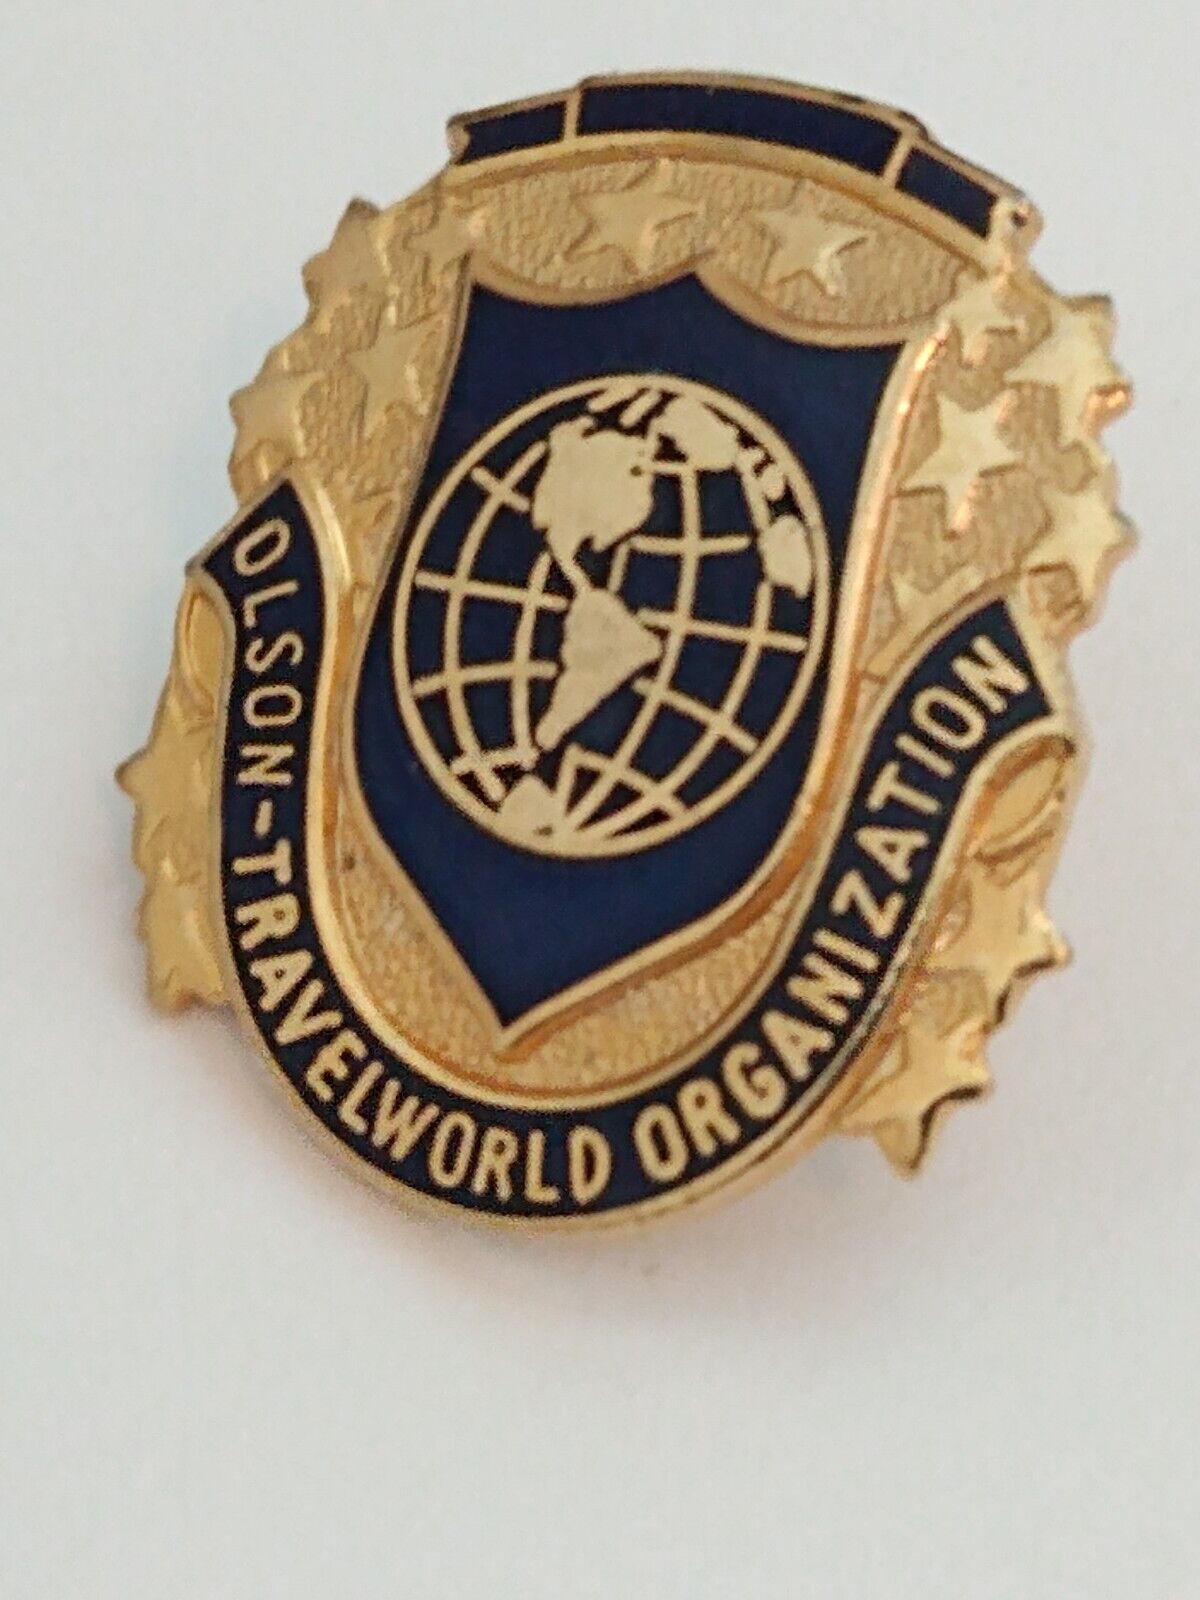 Olson-Travelworld Organization Lapel Pin